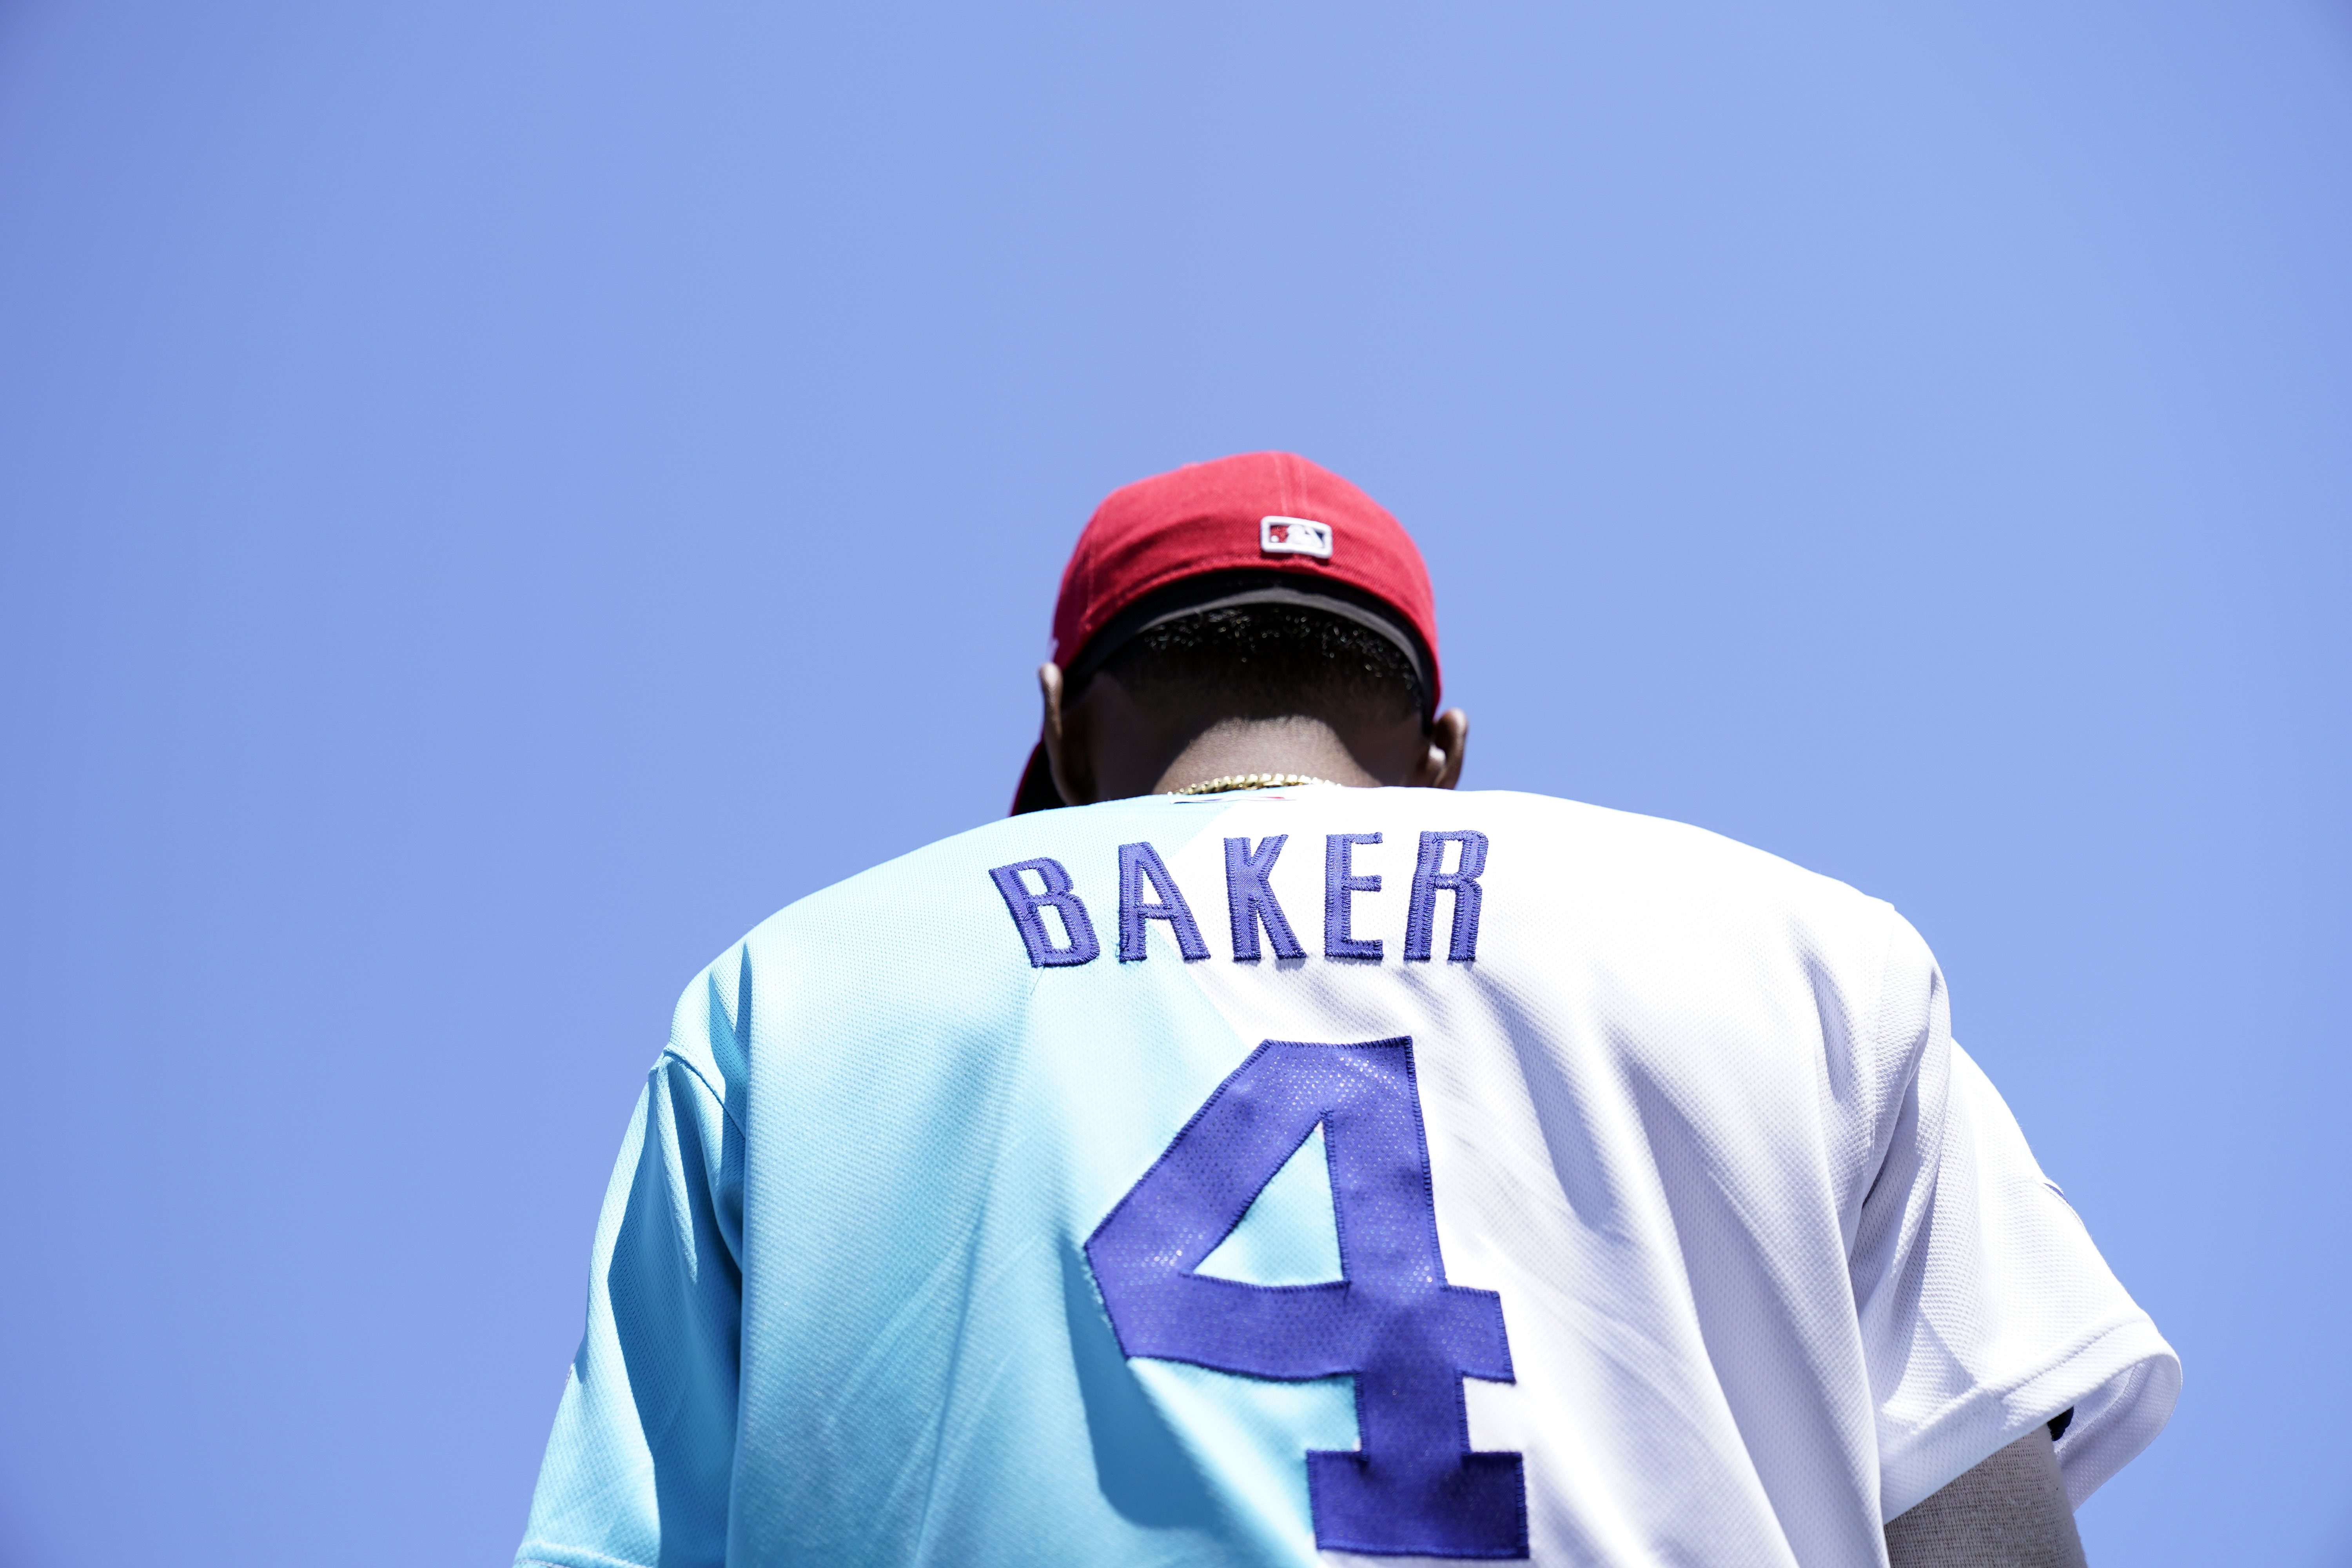 Darren Baker brings flash, history to Cape Cod Baseball League